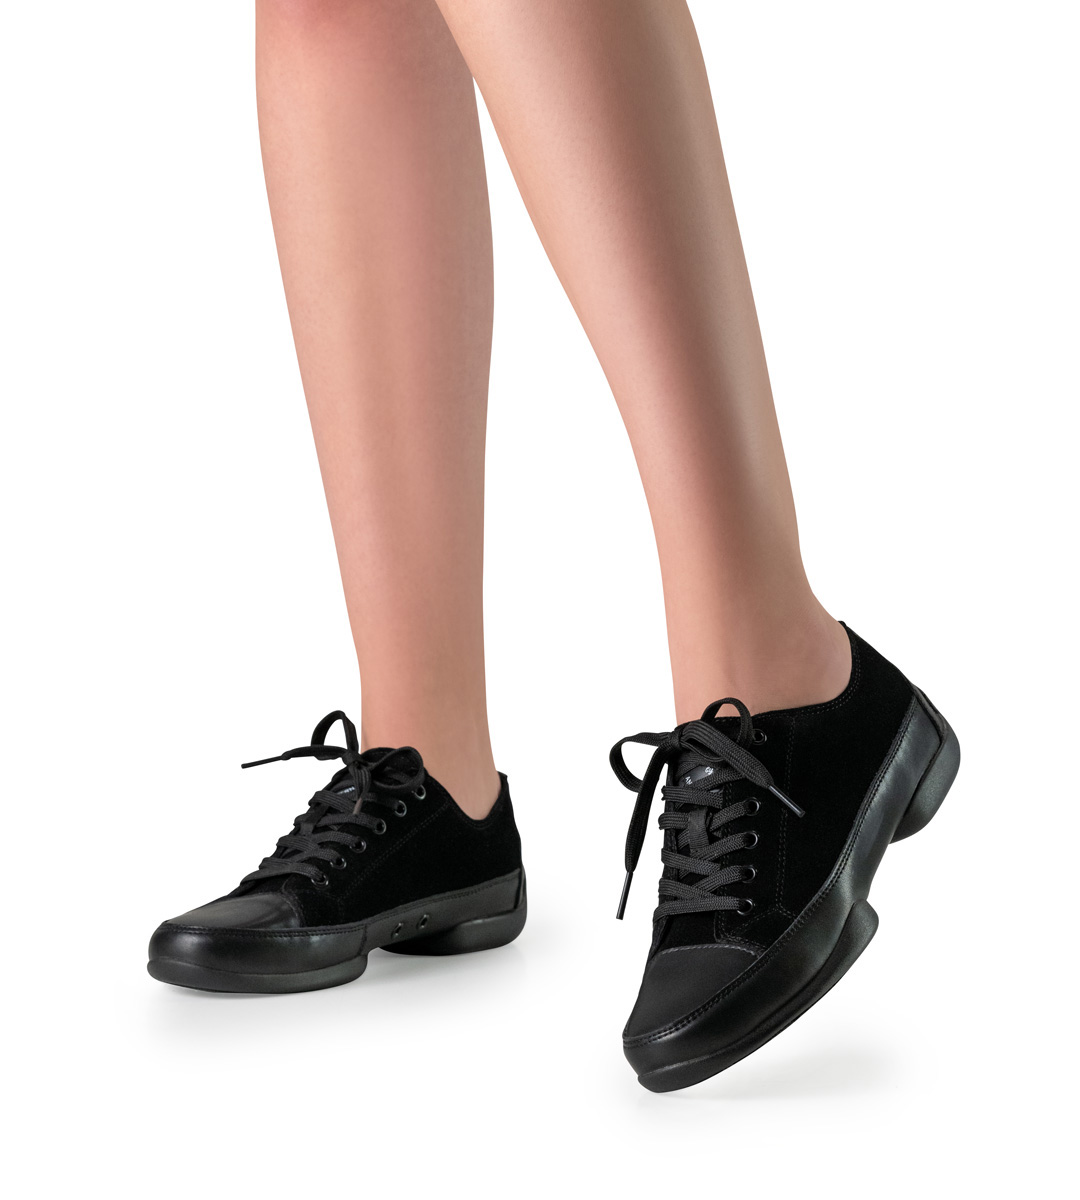 1.5 cm high black dance sneaker for ladies